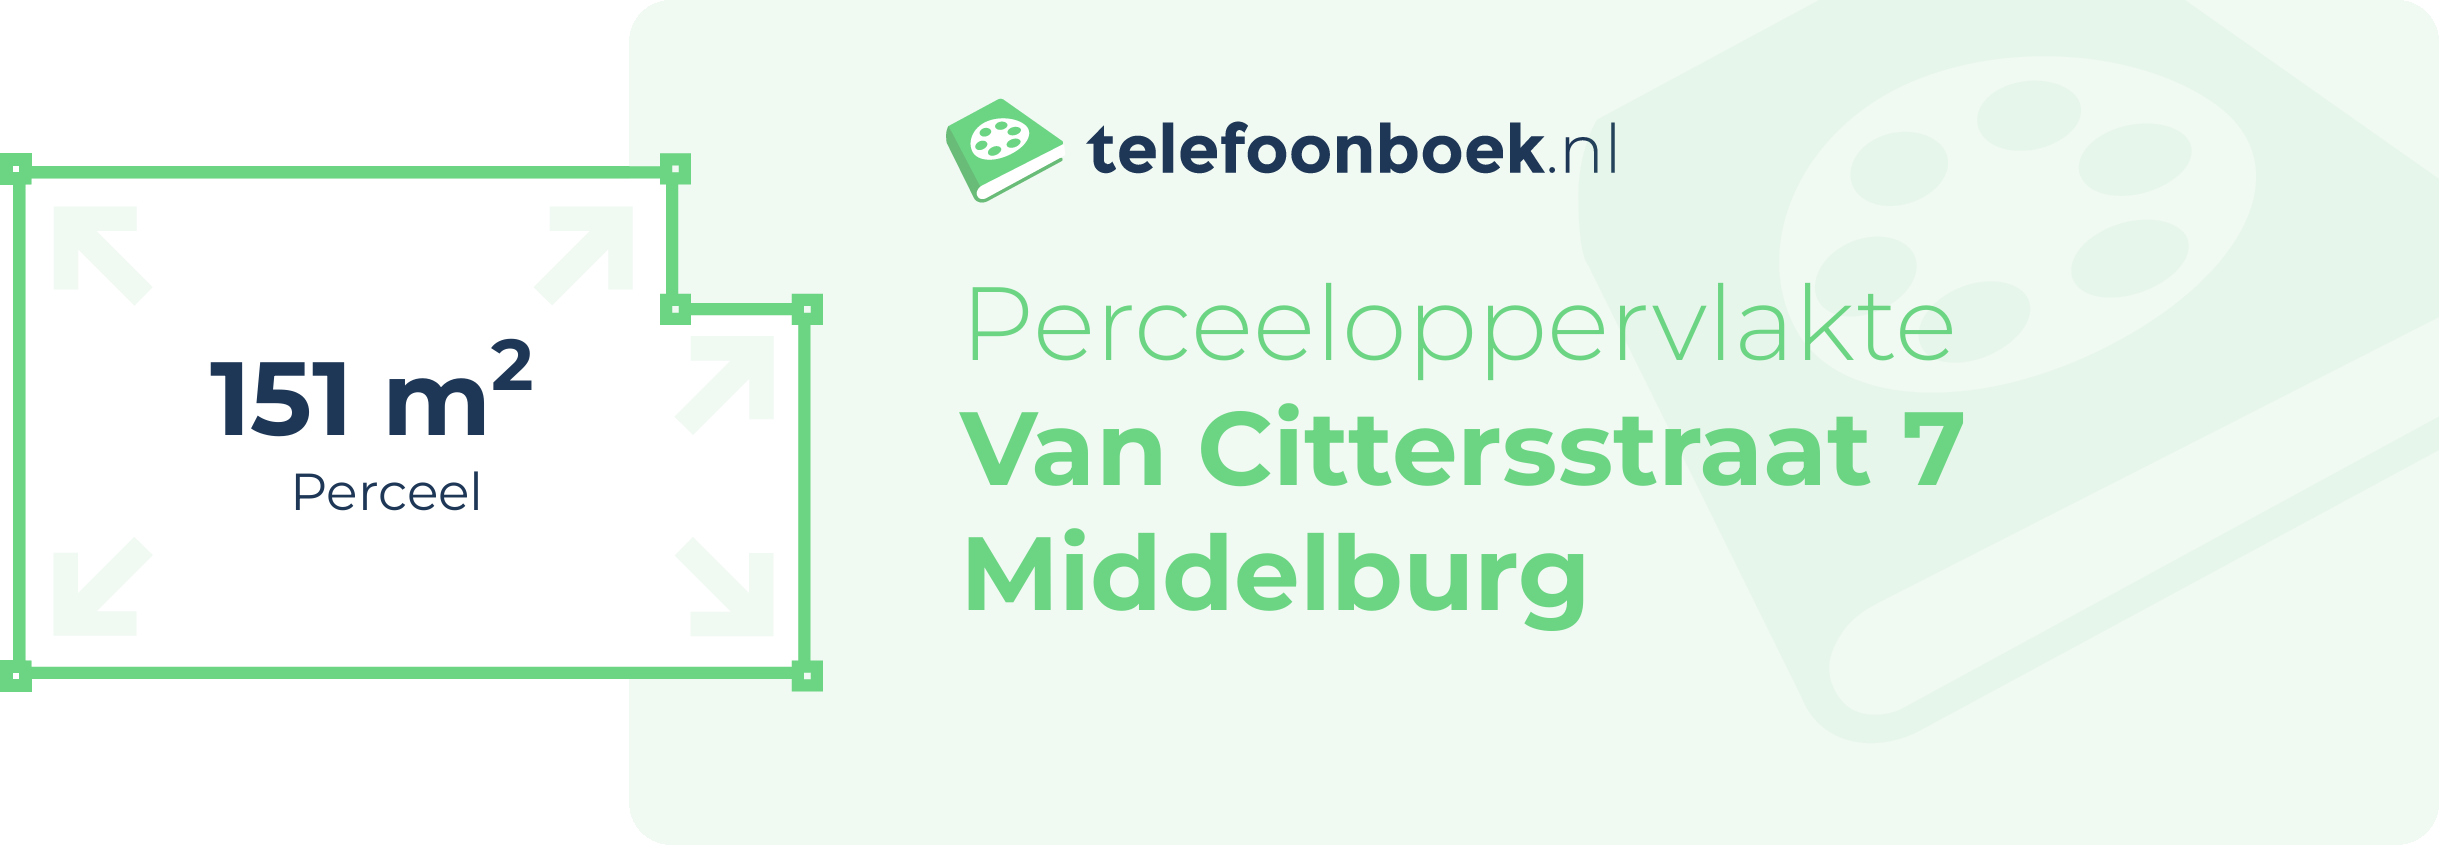 Perceeloppervlakte Van Cittersstraat 7 Middelburg